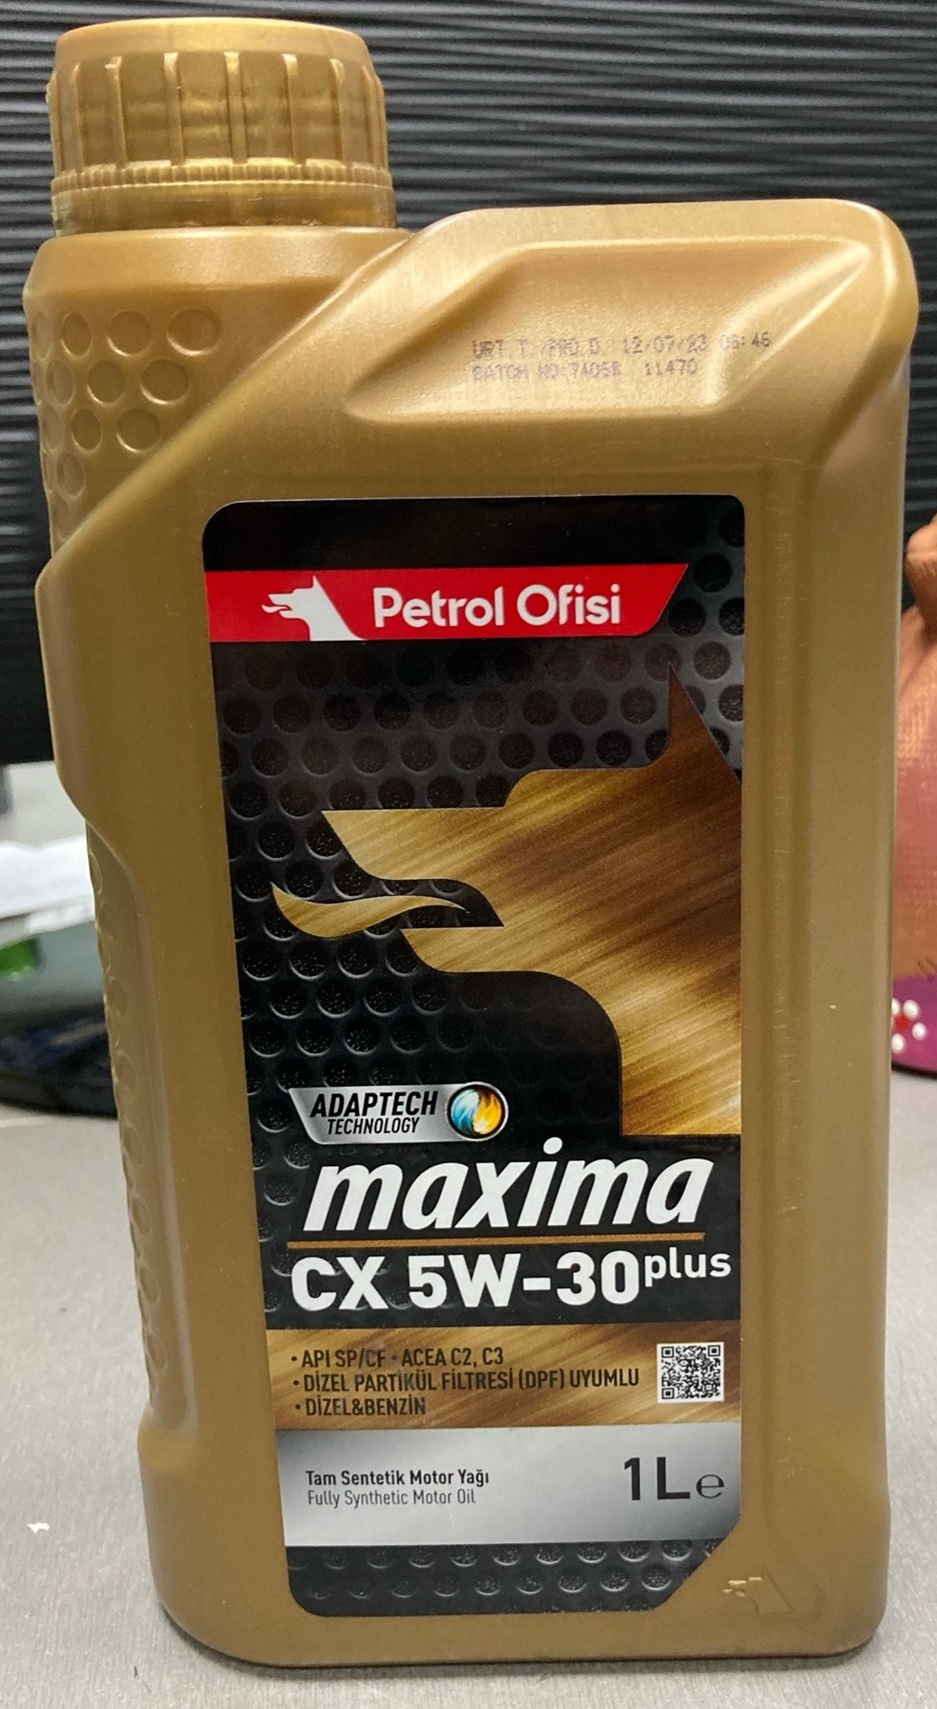 Petrol Ofisi MAXIMA CX 5W-30 PLUS 1L Моторное масло  SP/ C2/C3